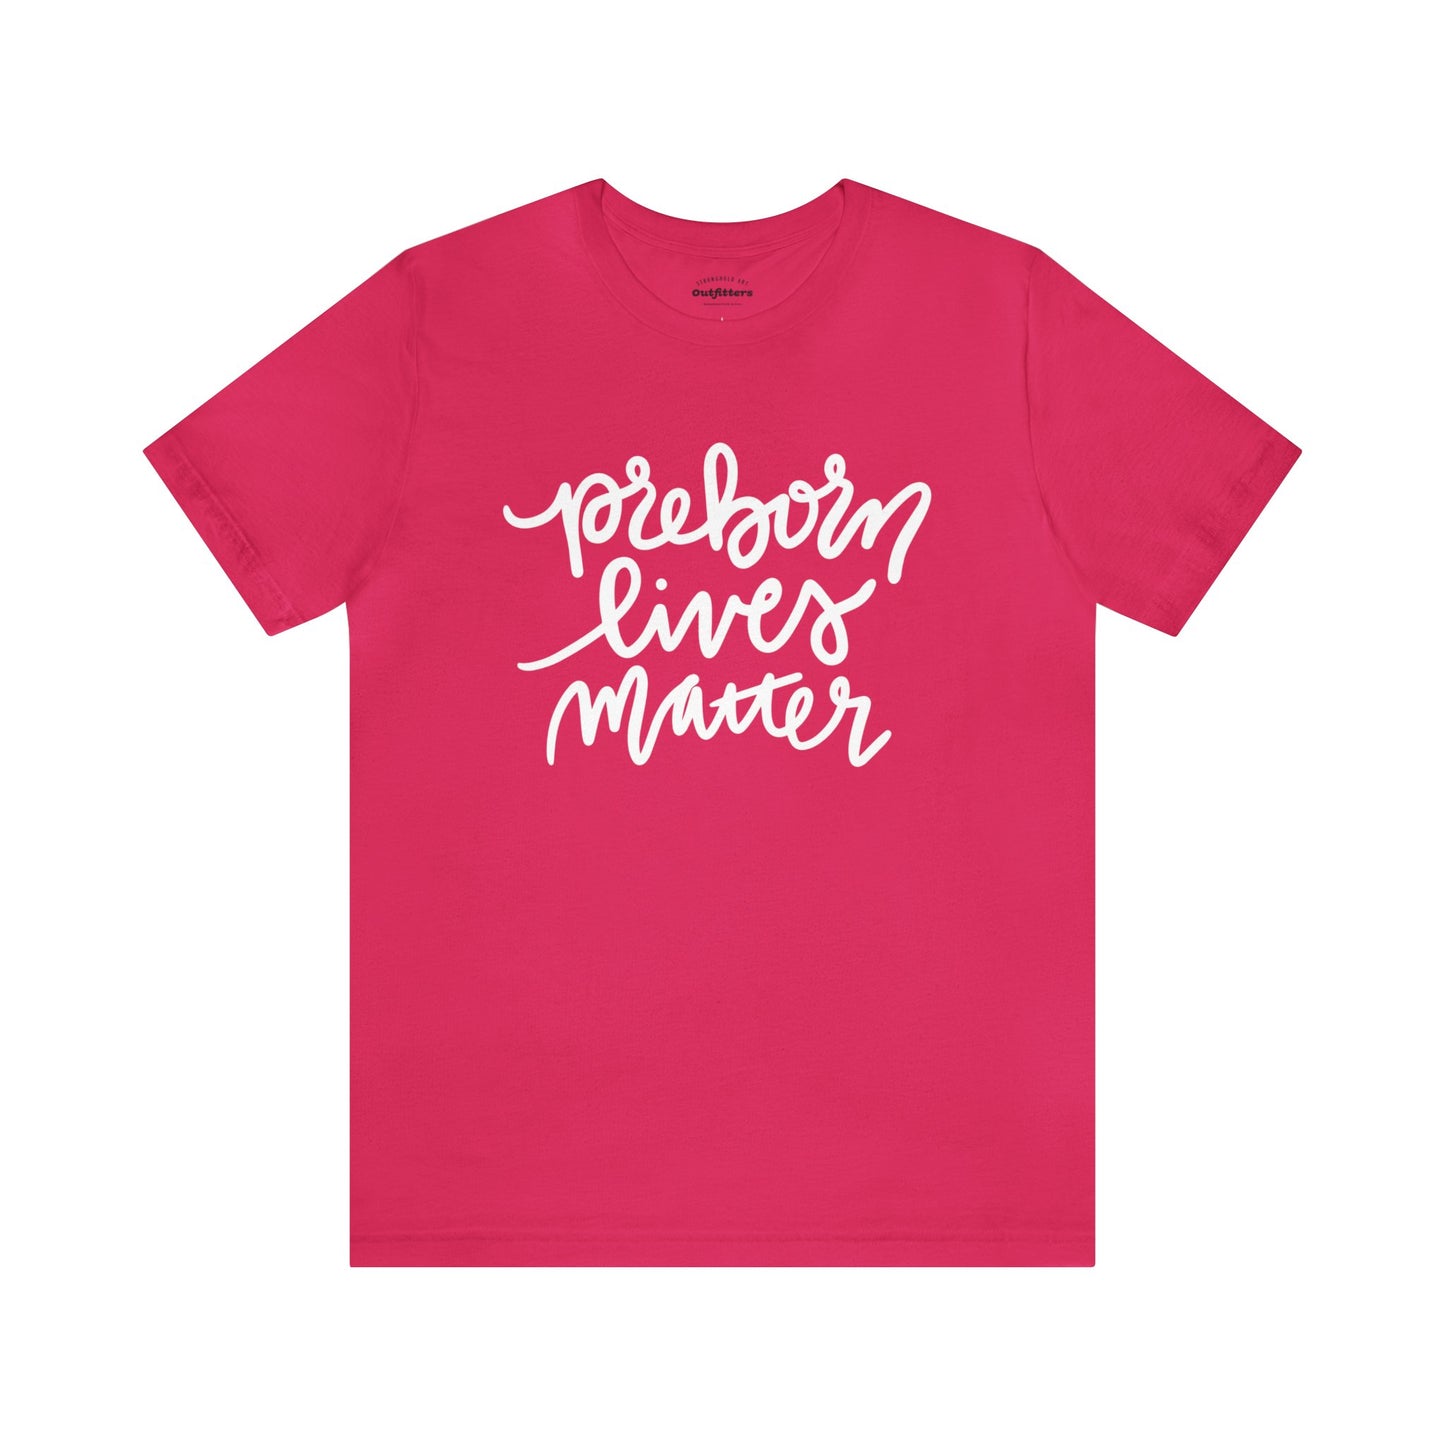 Preborn Lives Matter | Pregnancy center Donation | T-shirt